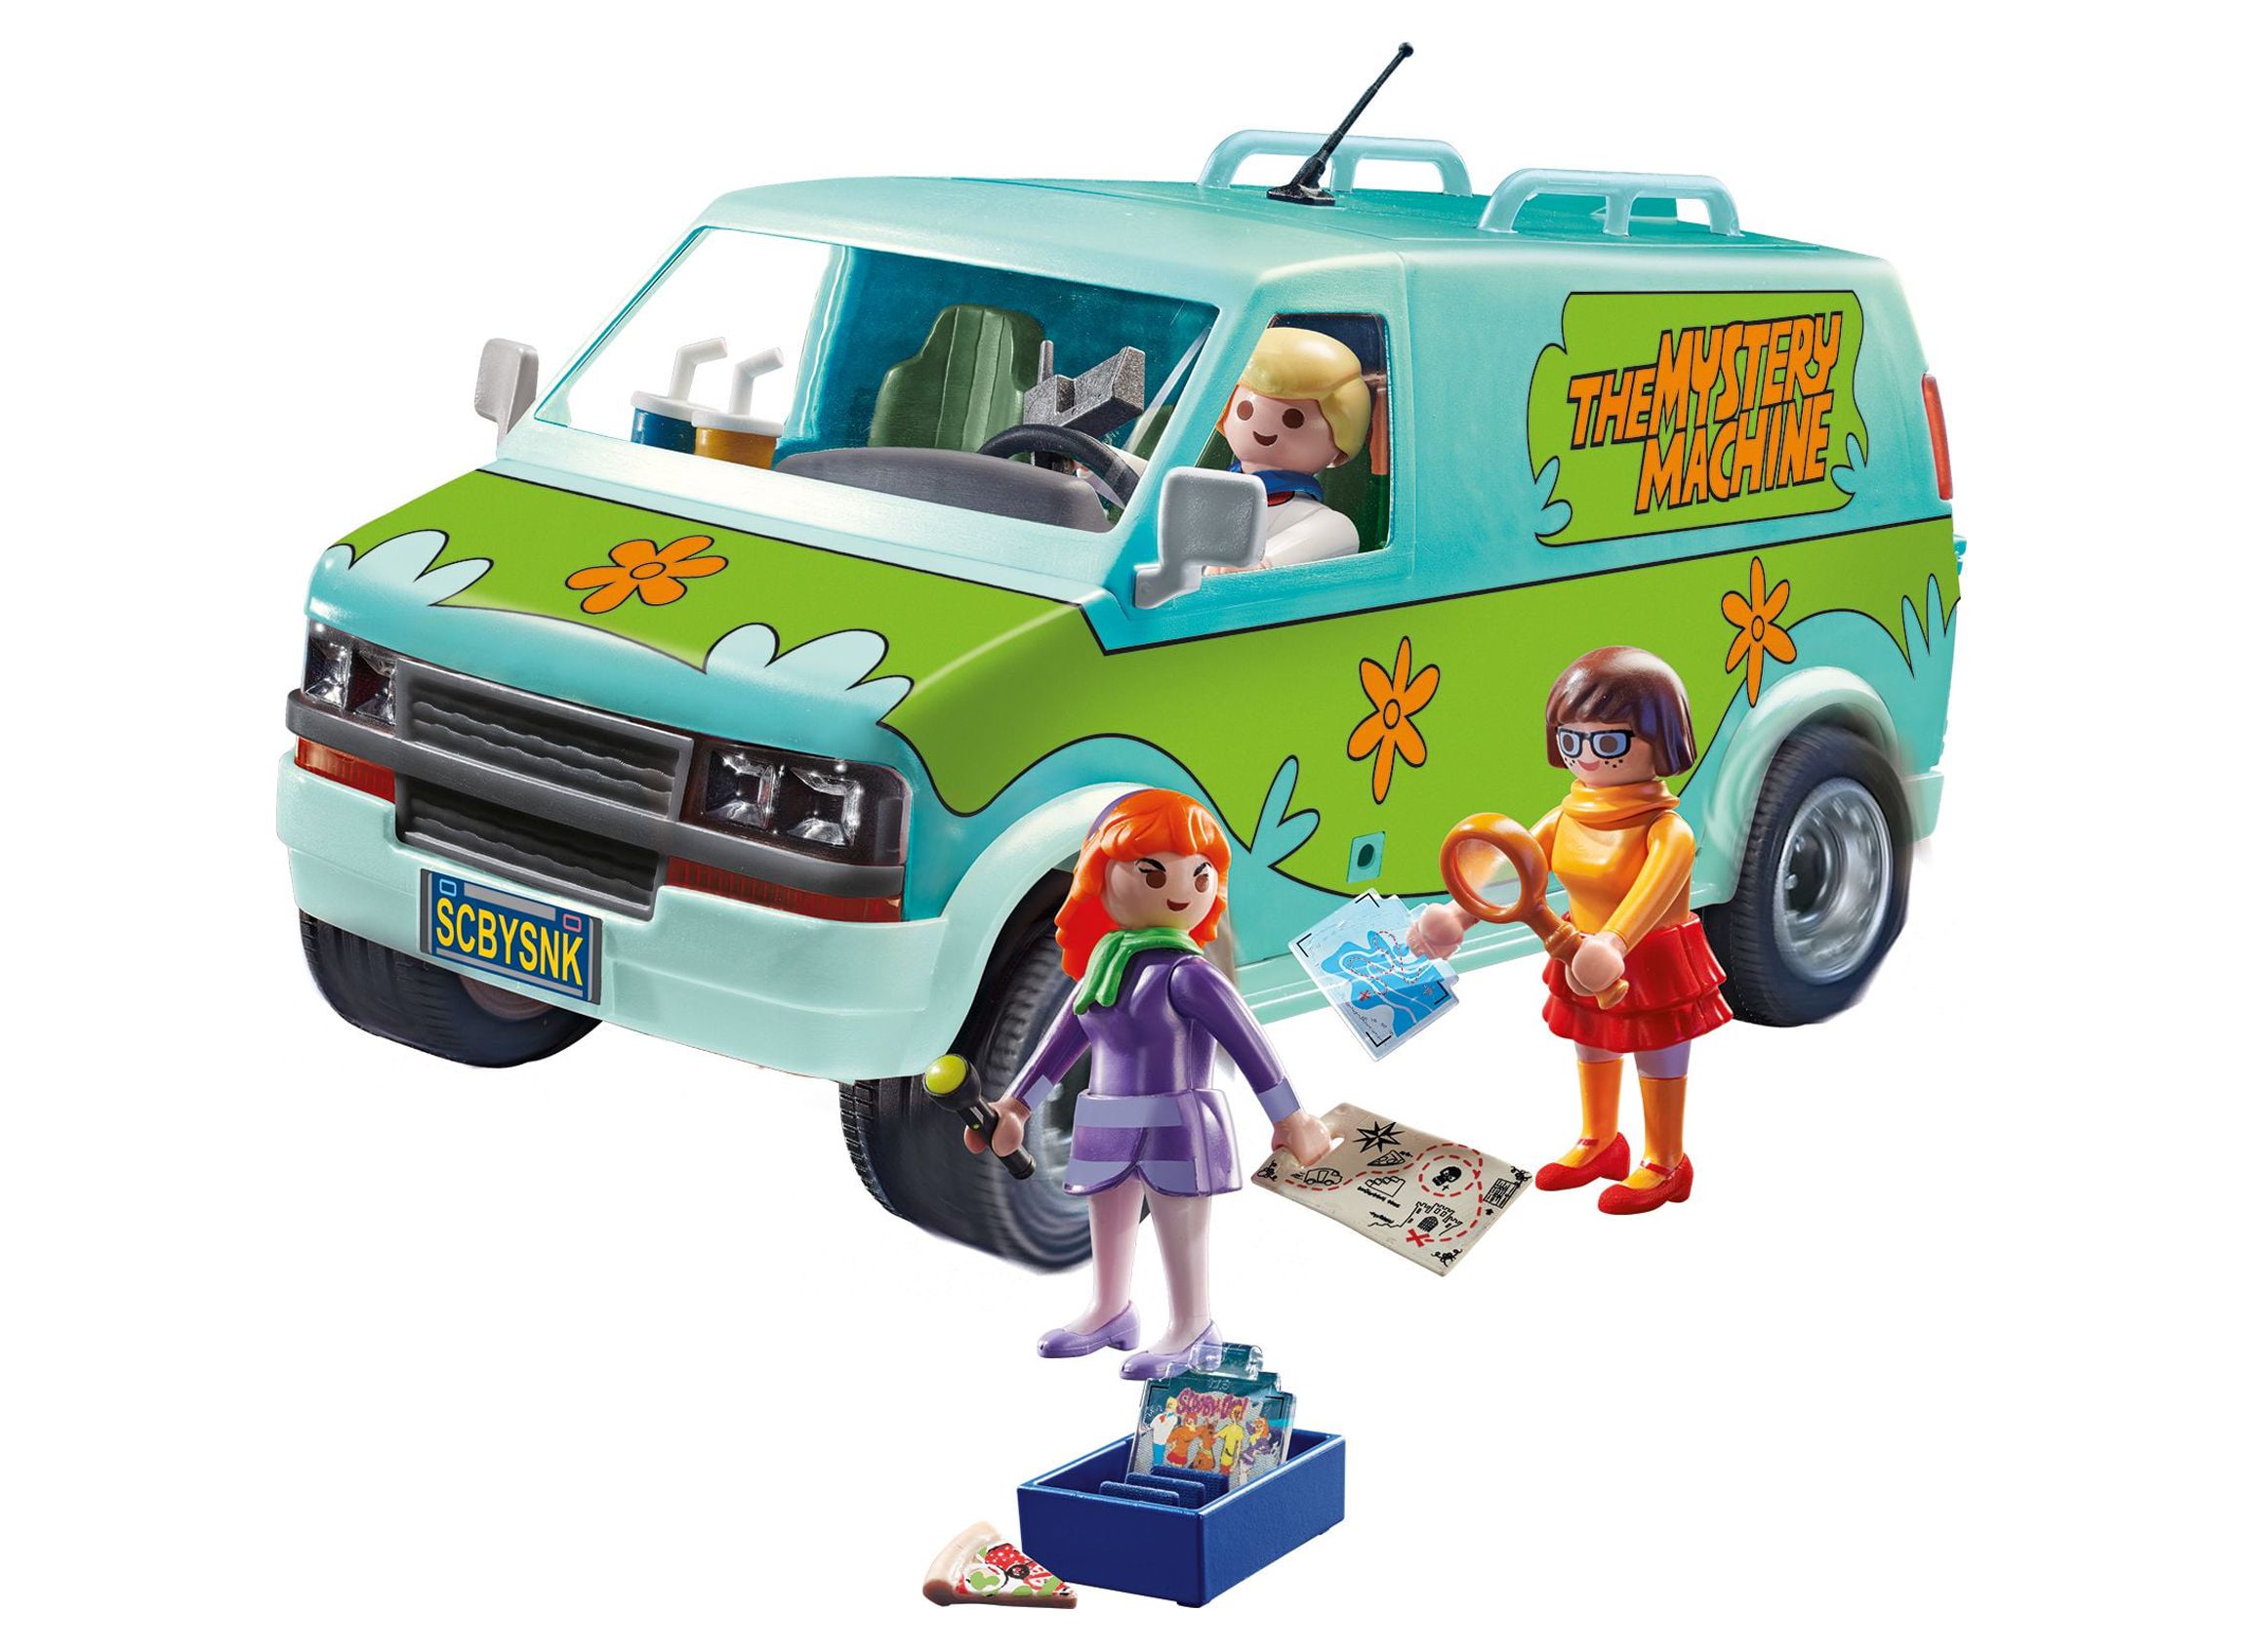 PLAYMOBIL Scooby Doo Mystery Machine - image 1 of 8